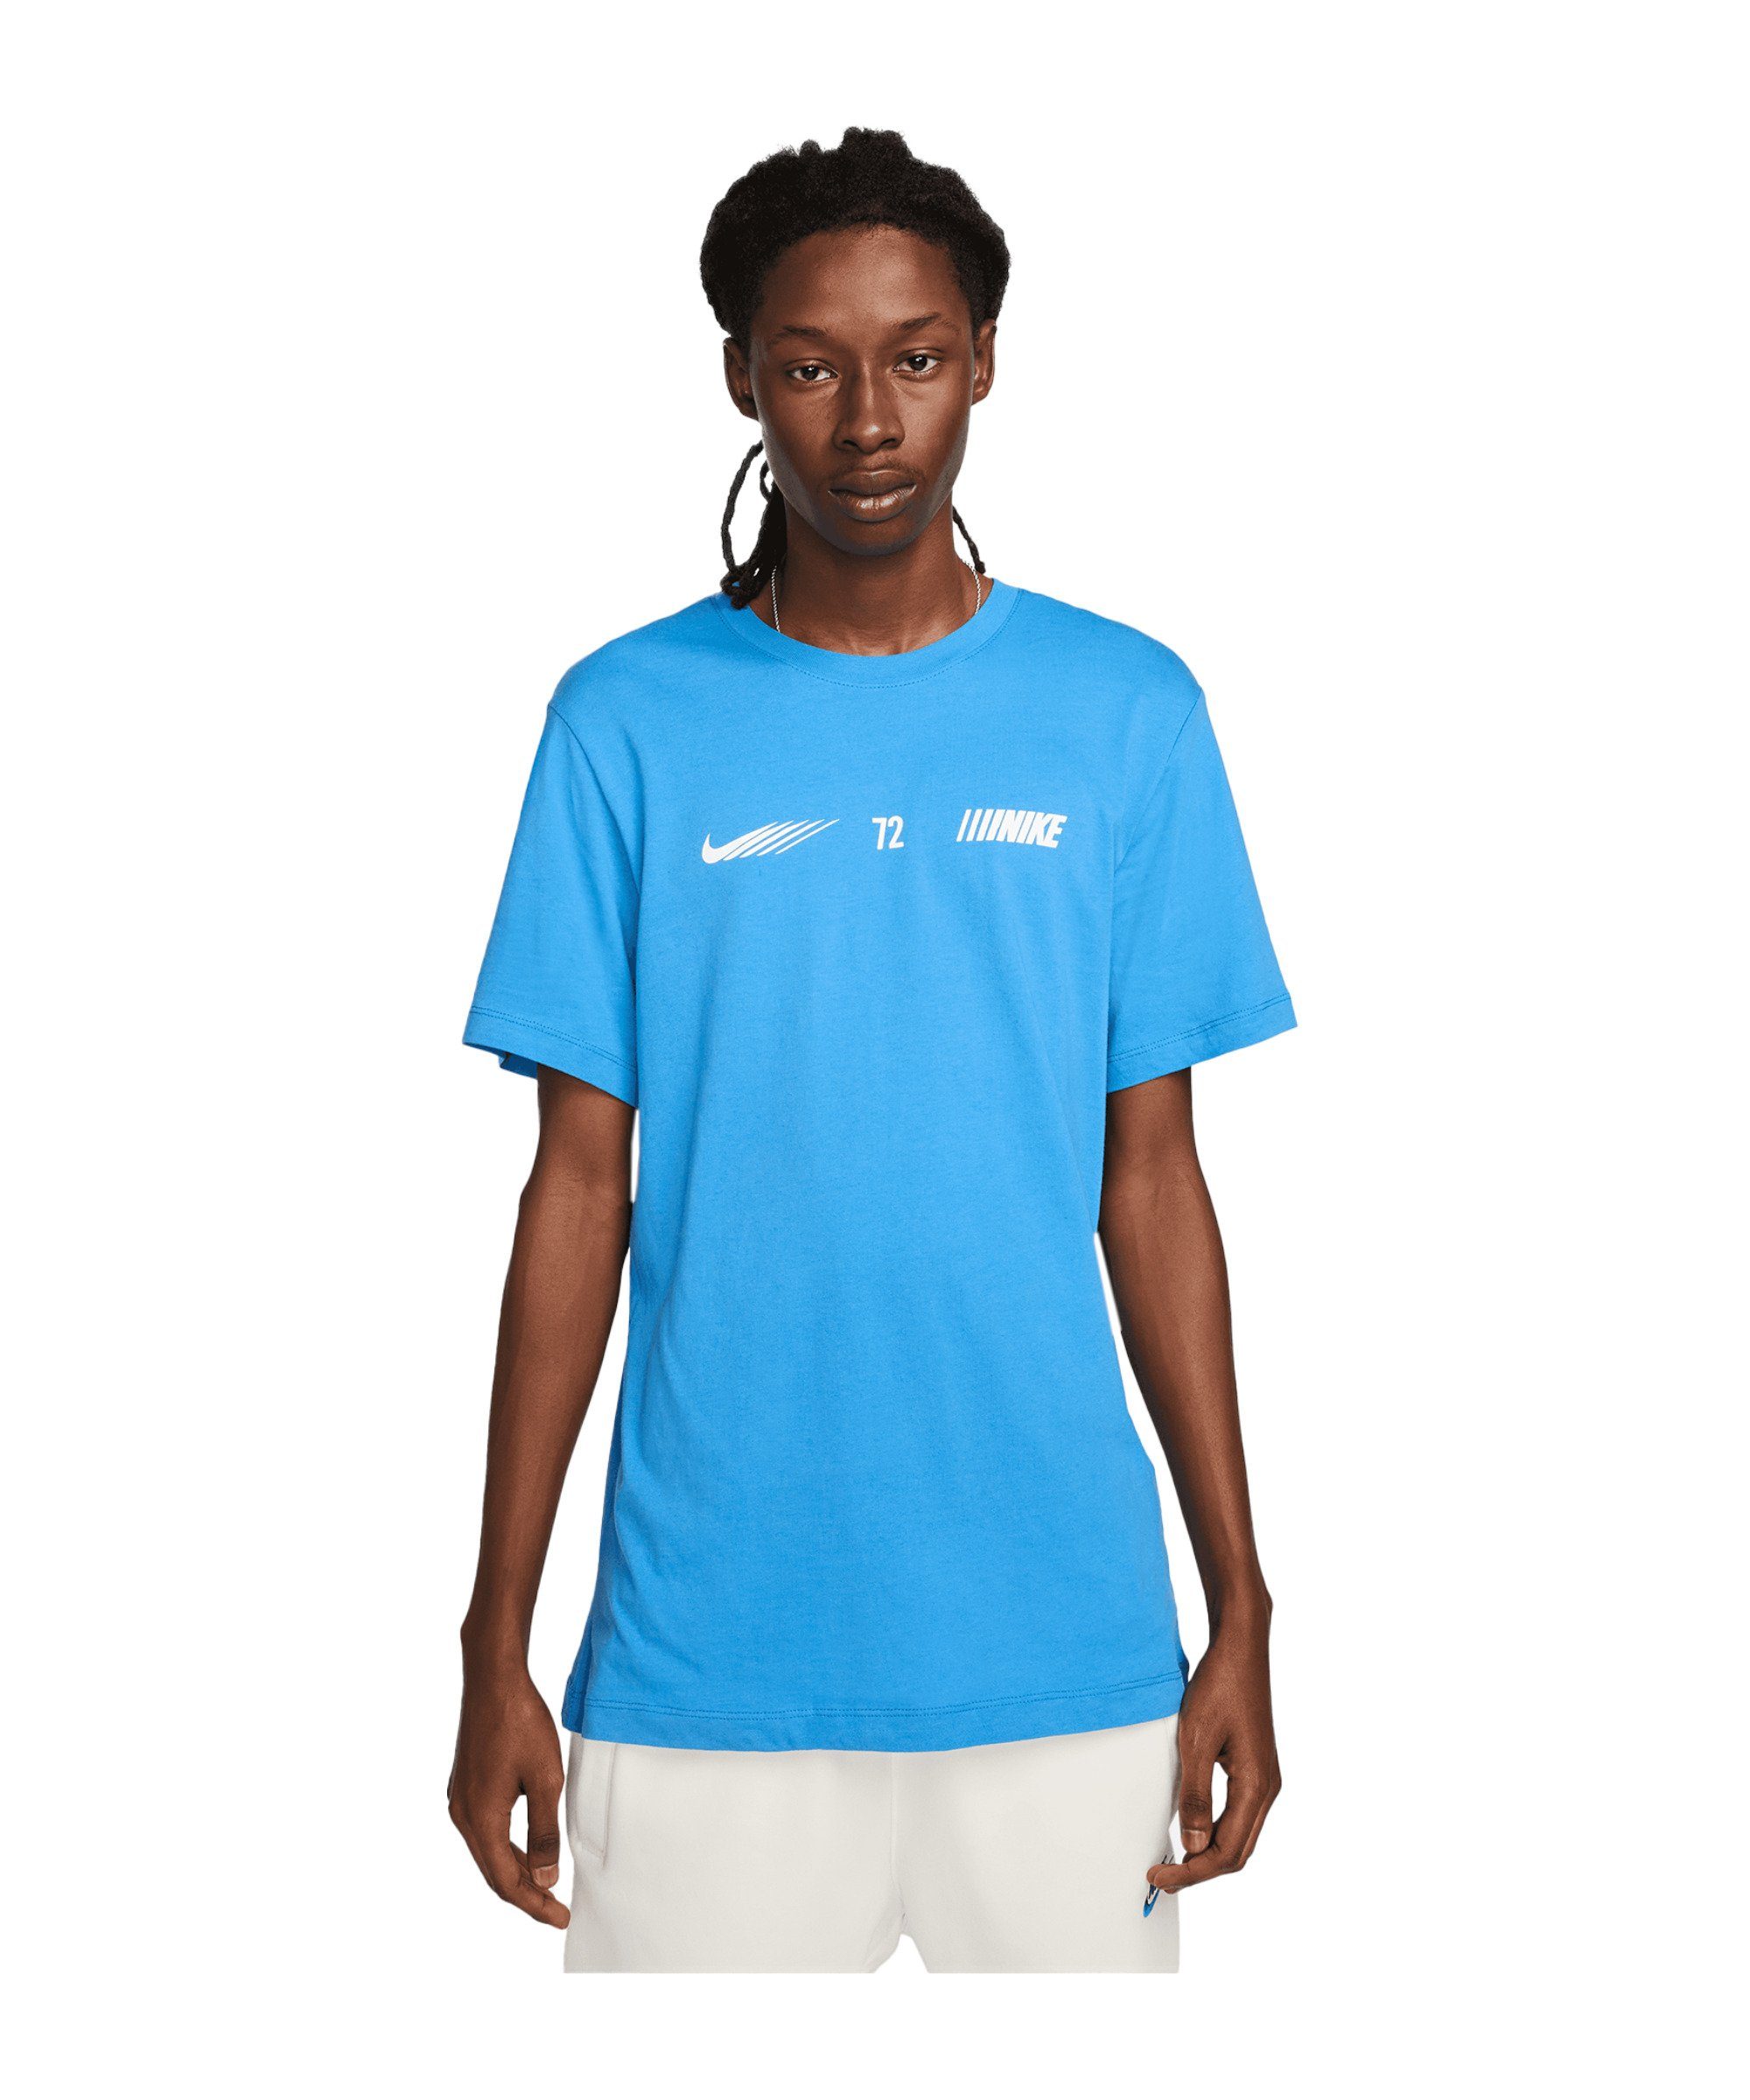 T-Shirt default blau Standart T-Shirt Sportswear Issue Nike